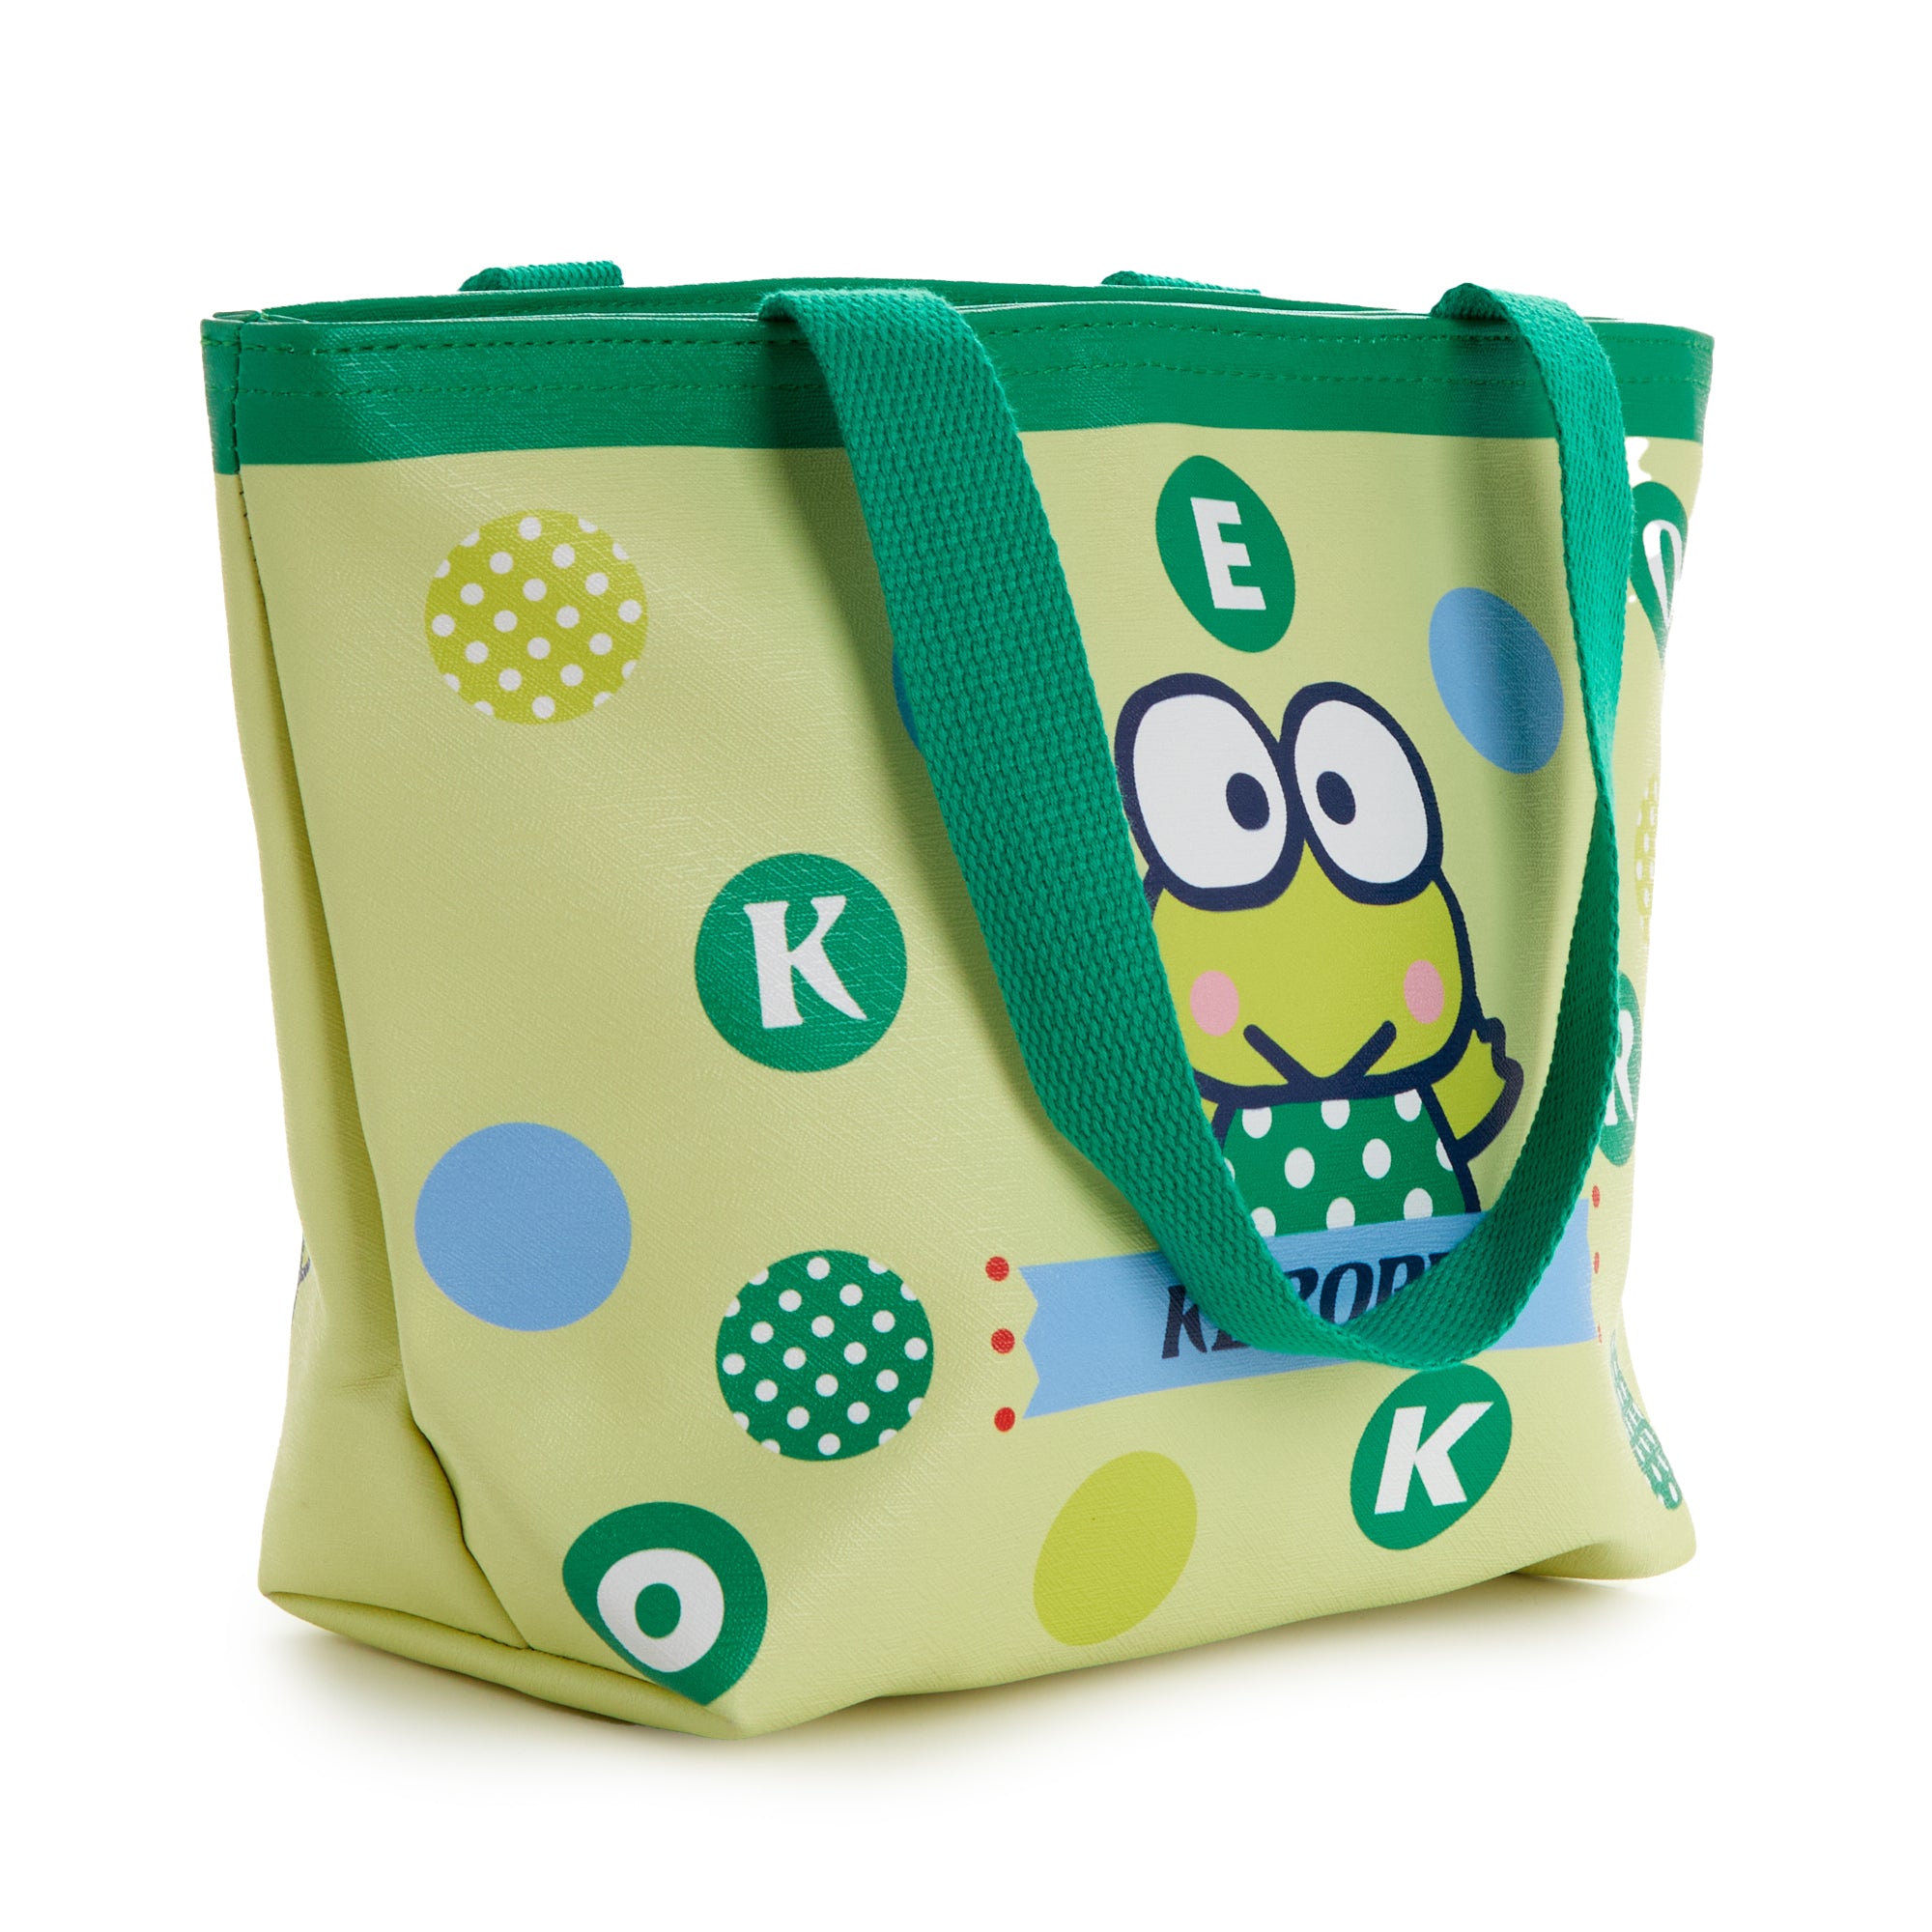 Keroppi Insulated Lunch Bag (Kero-Dot Series) Bags NAKAJIMA CORPORATION   